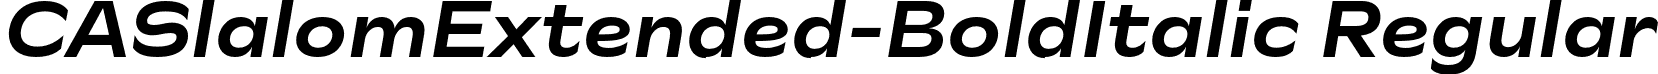 CASlalomExtended-BoldItalic Regular font | CASlalomExtended-BoldItalic.otf